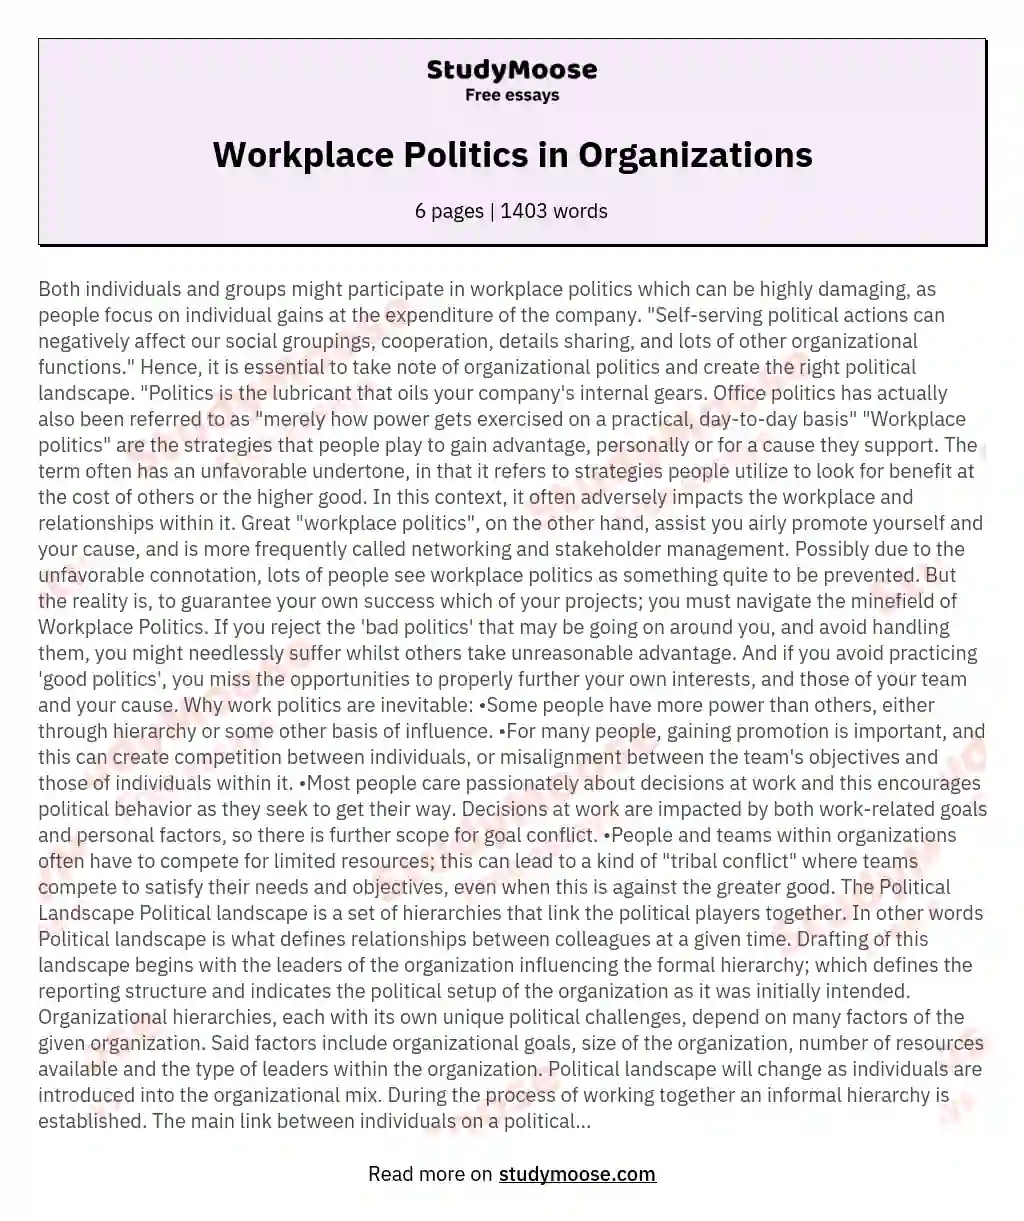 Workplace Politics in Organizations essay